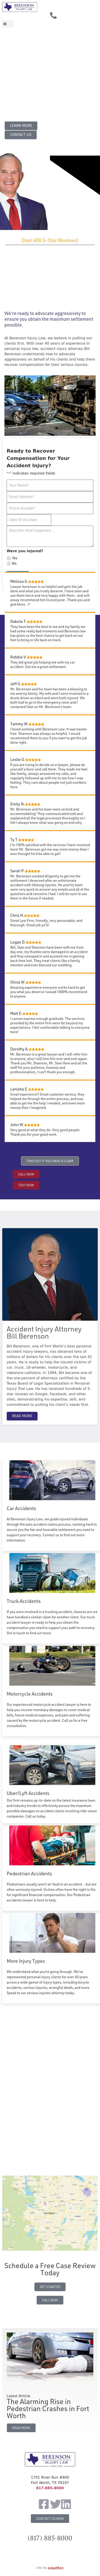 Berenson Injury Law - Fort Worth TX Lawyers